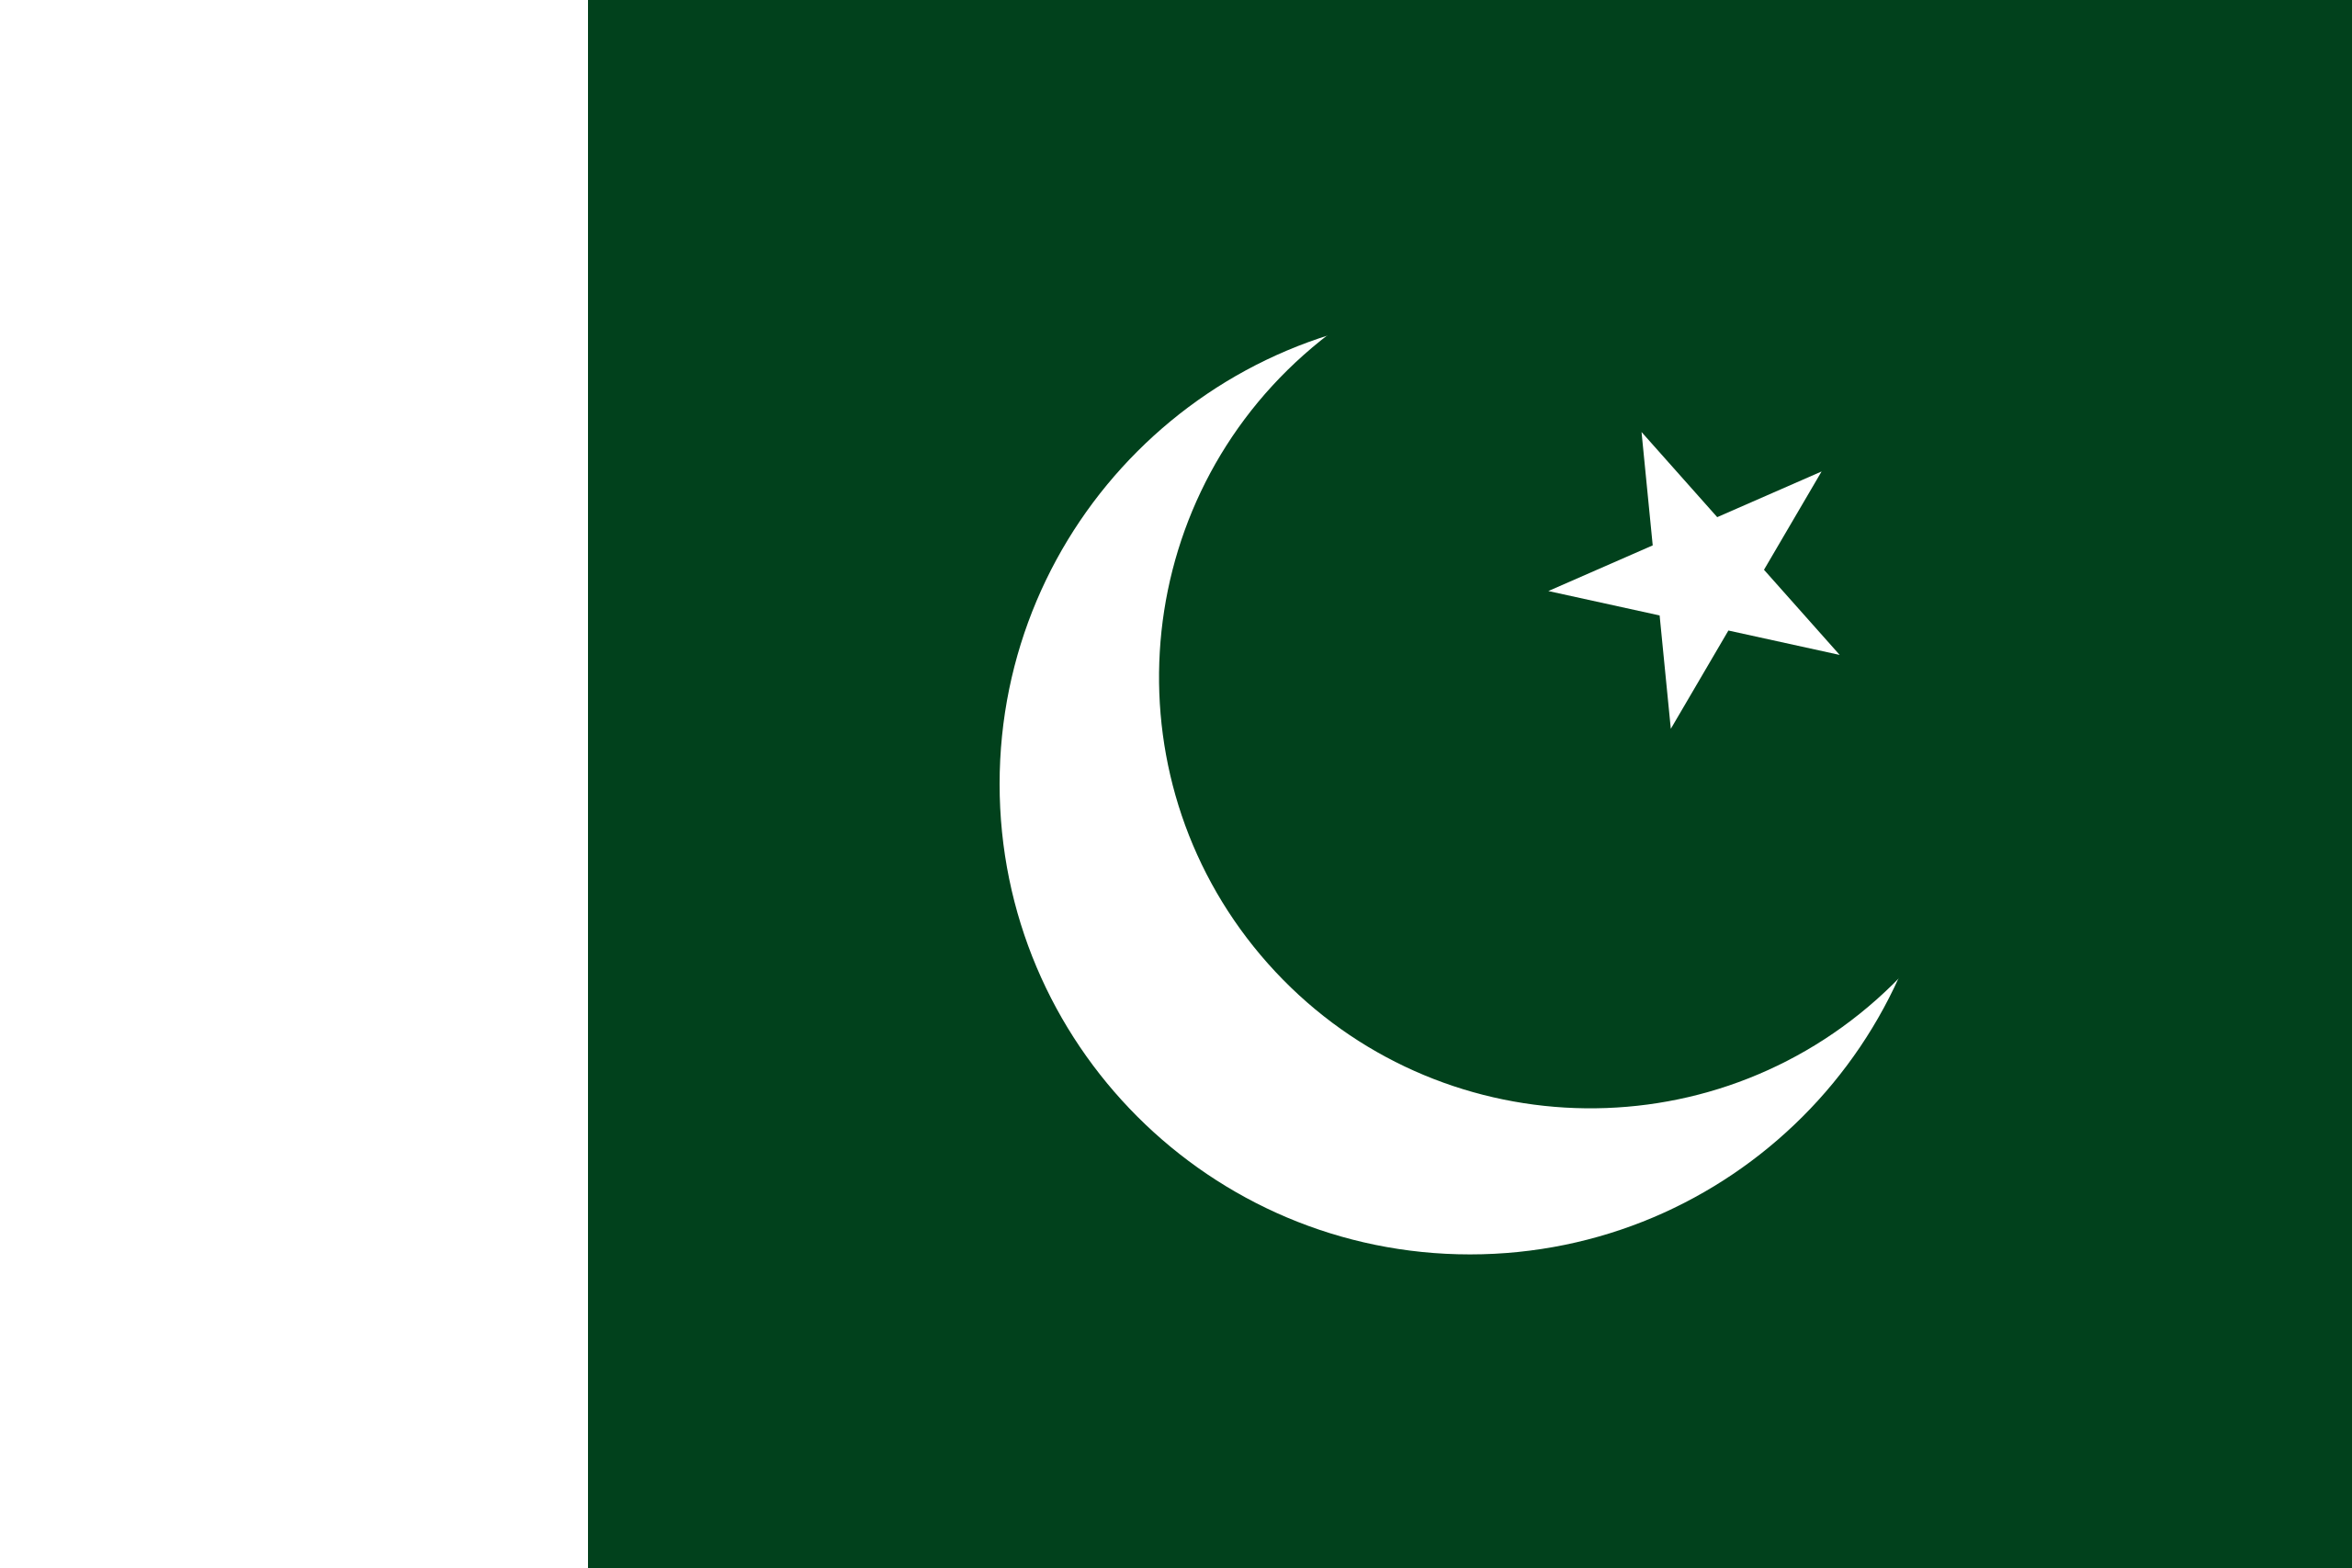 Pakistan National Football Team